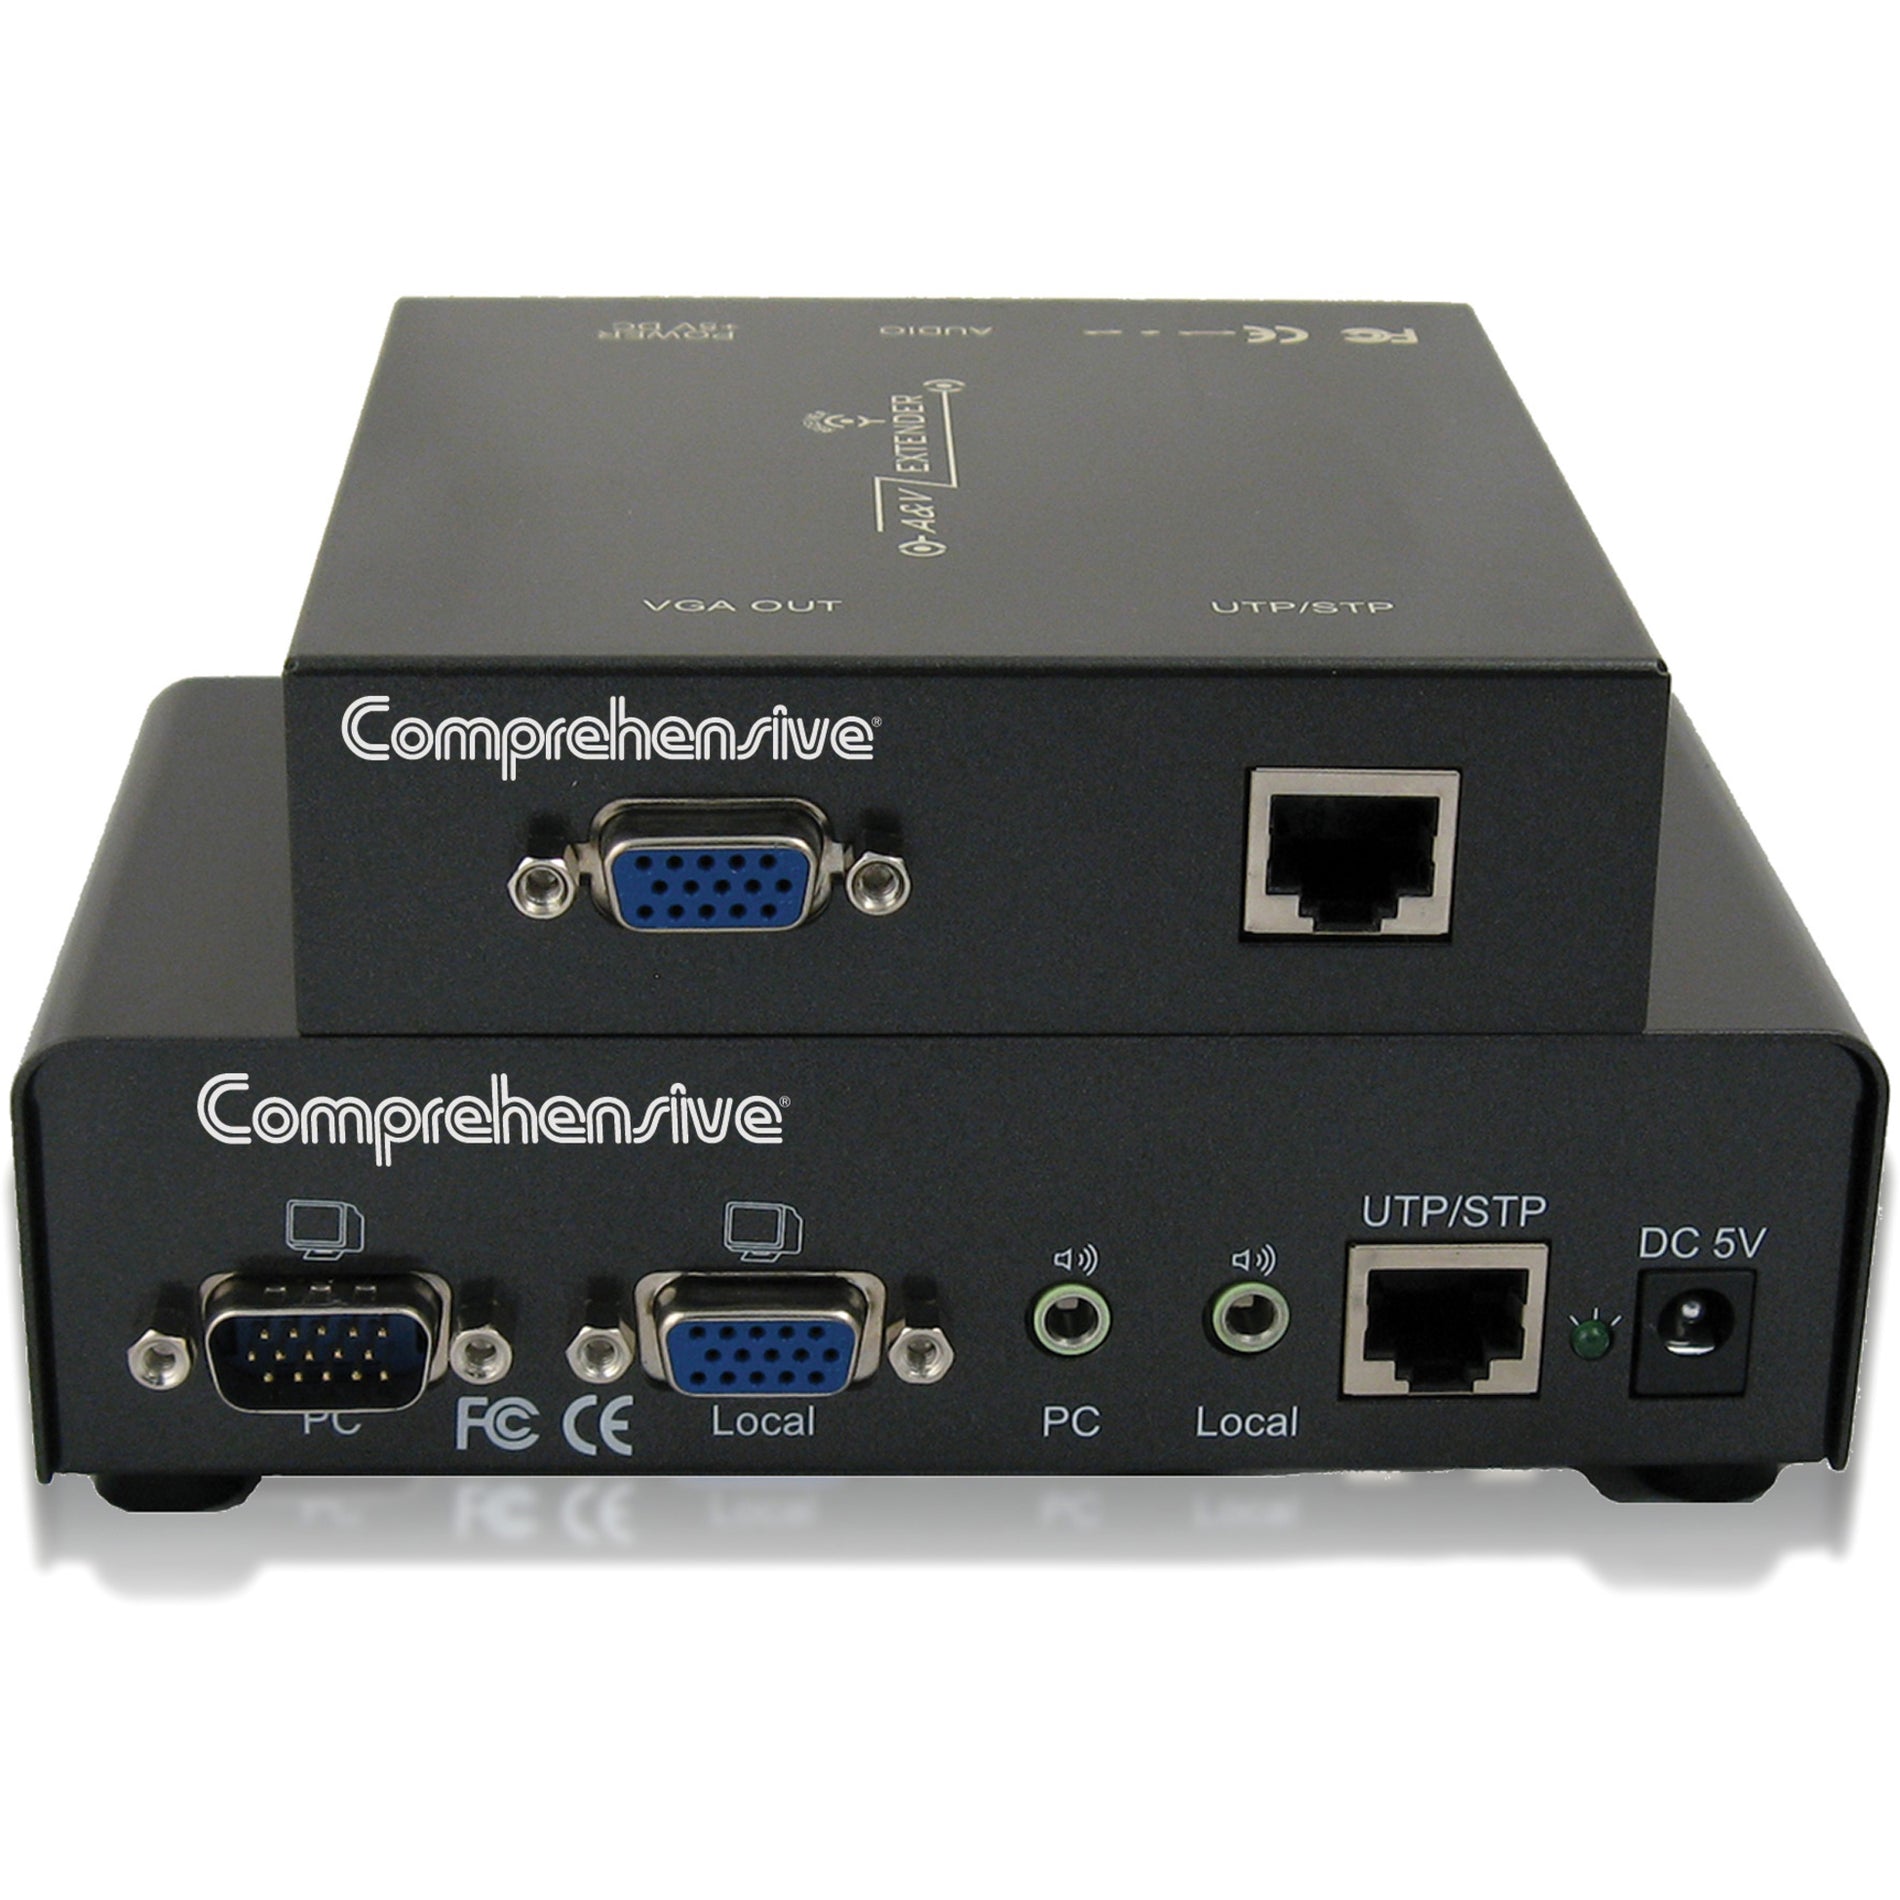 Comprehensive CVE-TRX01 Comprehensive Single Source, Single Display VGA Extender over Cat5e, 1920 x 1200 Resolution, 1000 ft Range